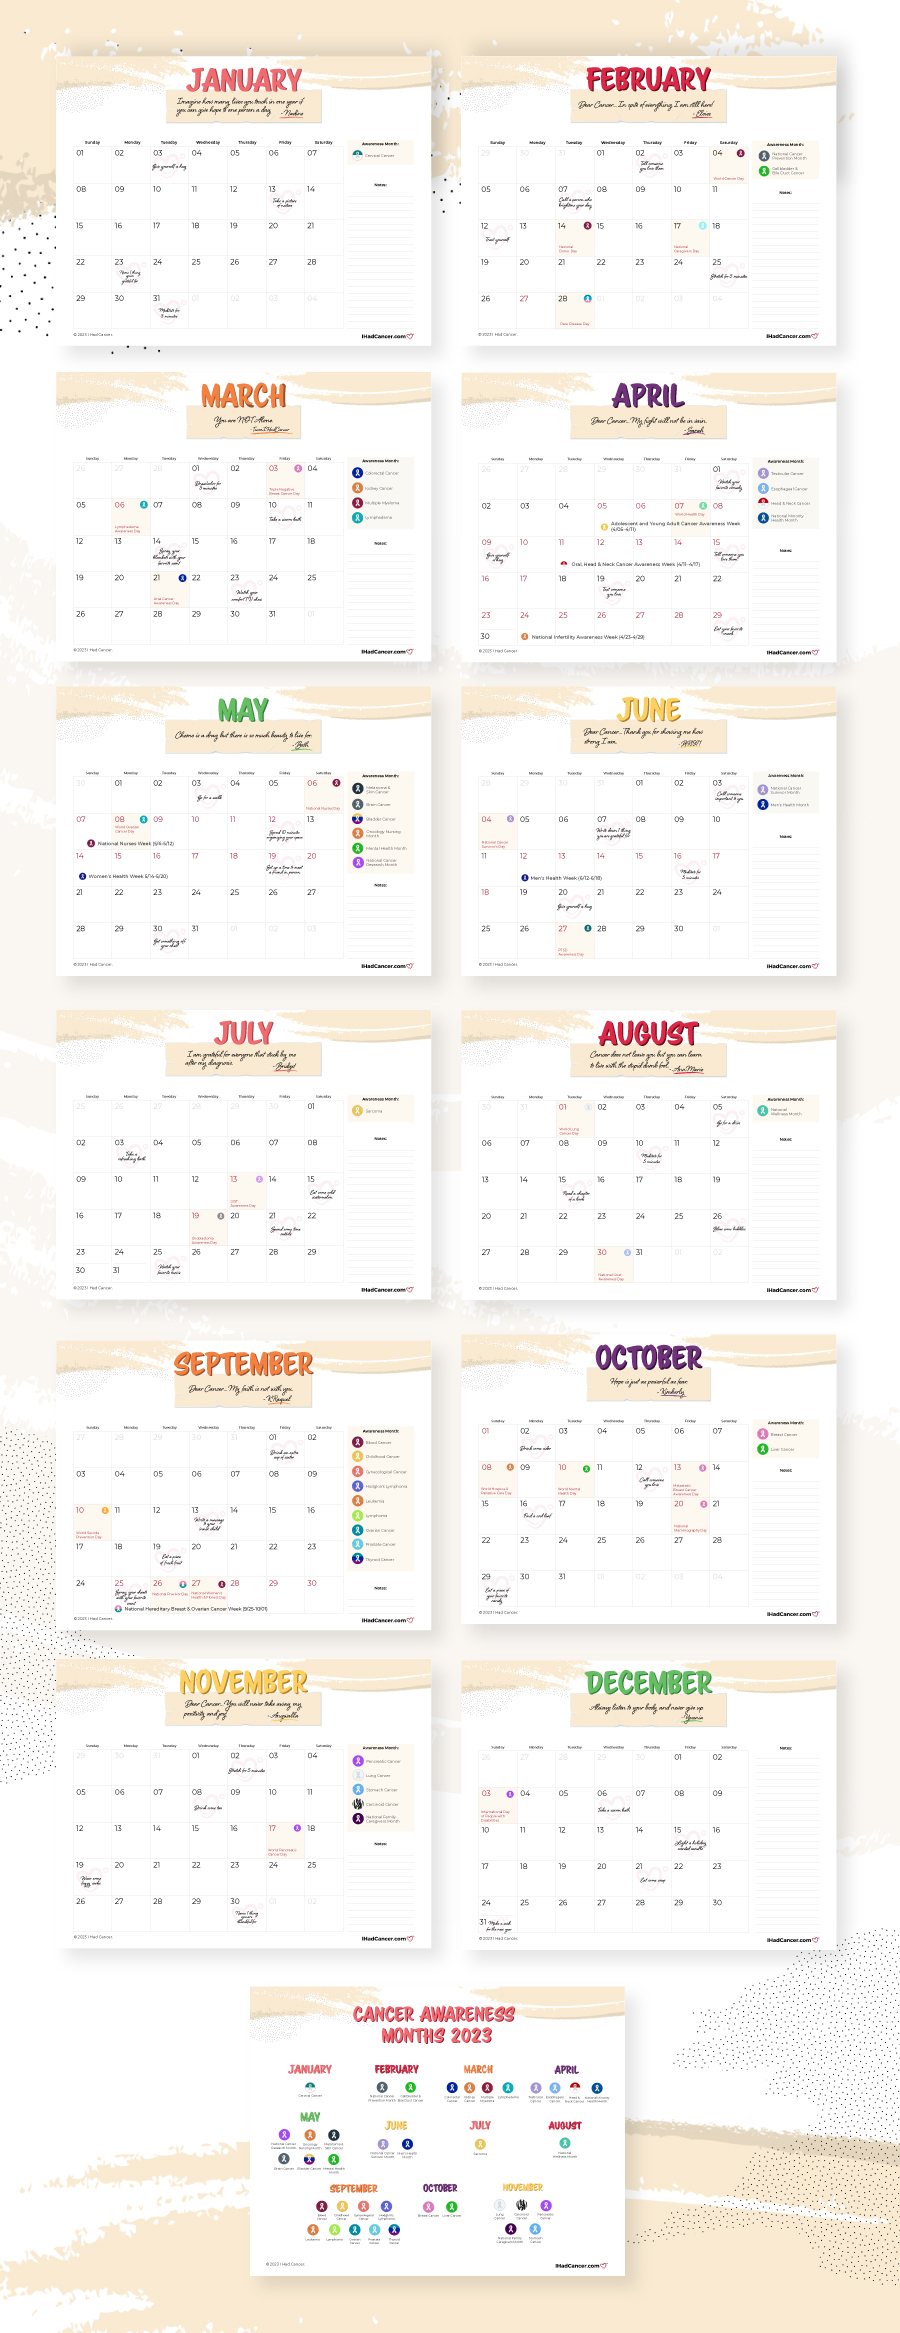 IHadCancer Awareness Calendar 2023 preview image